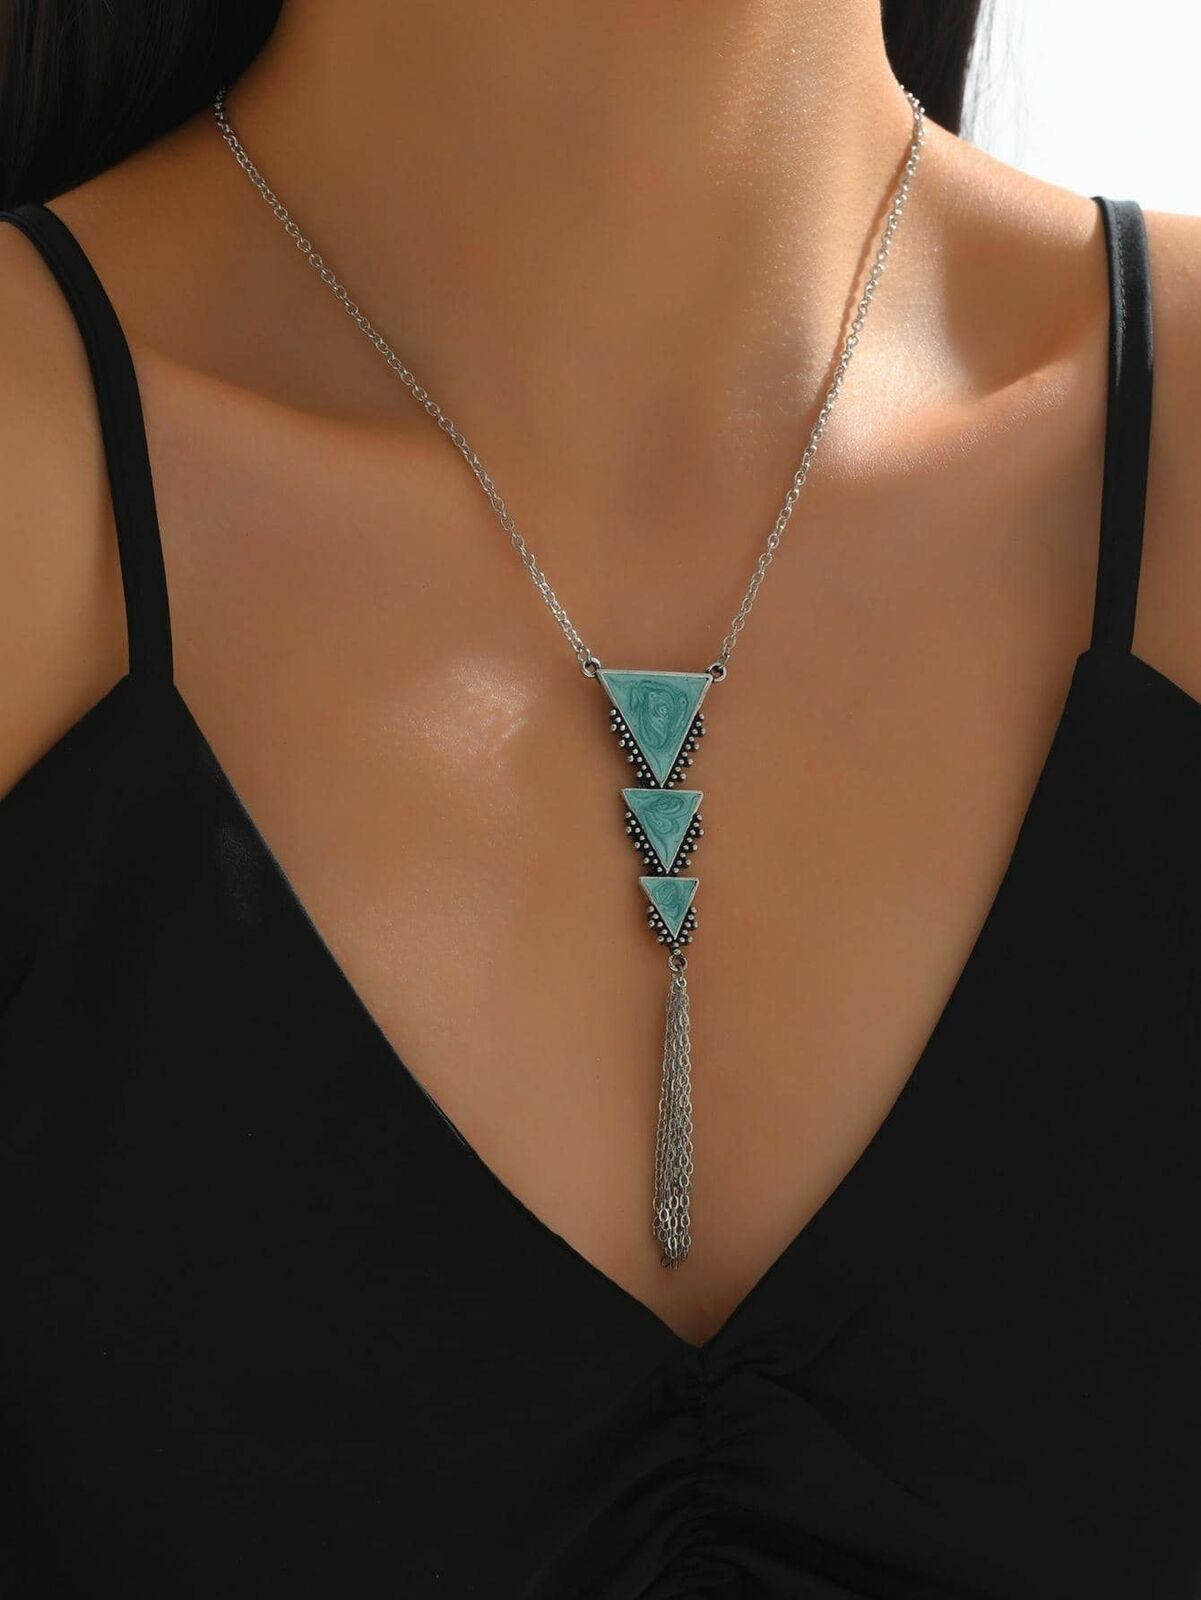 1pc Vintage Triangle & Chain Tassel Decor Pendant Necklace Bohemian Jewelry